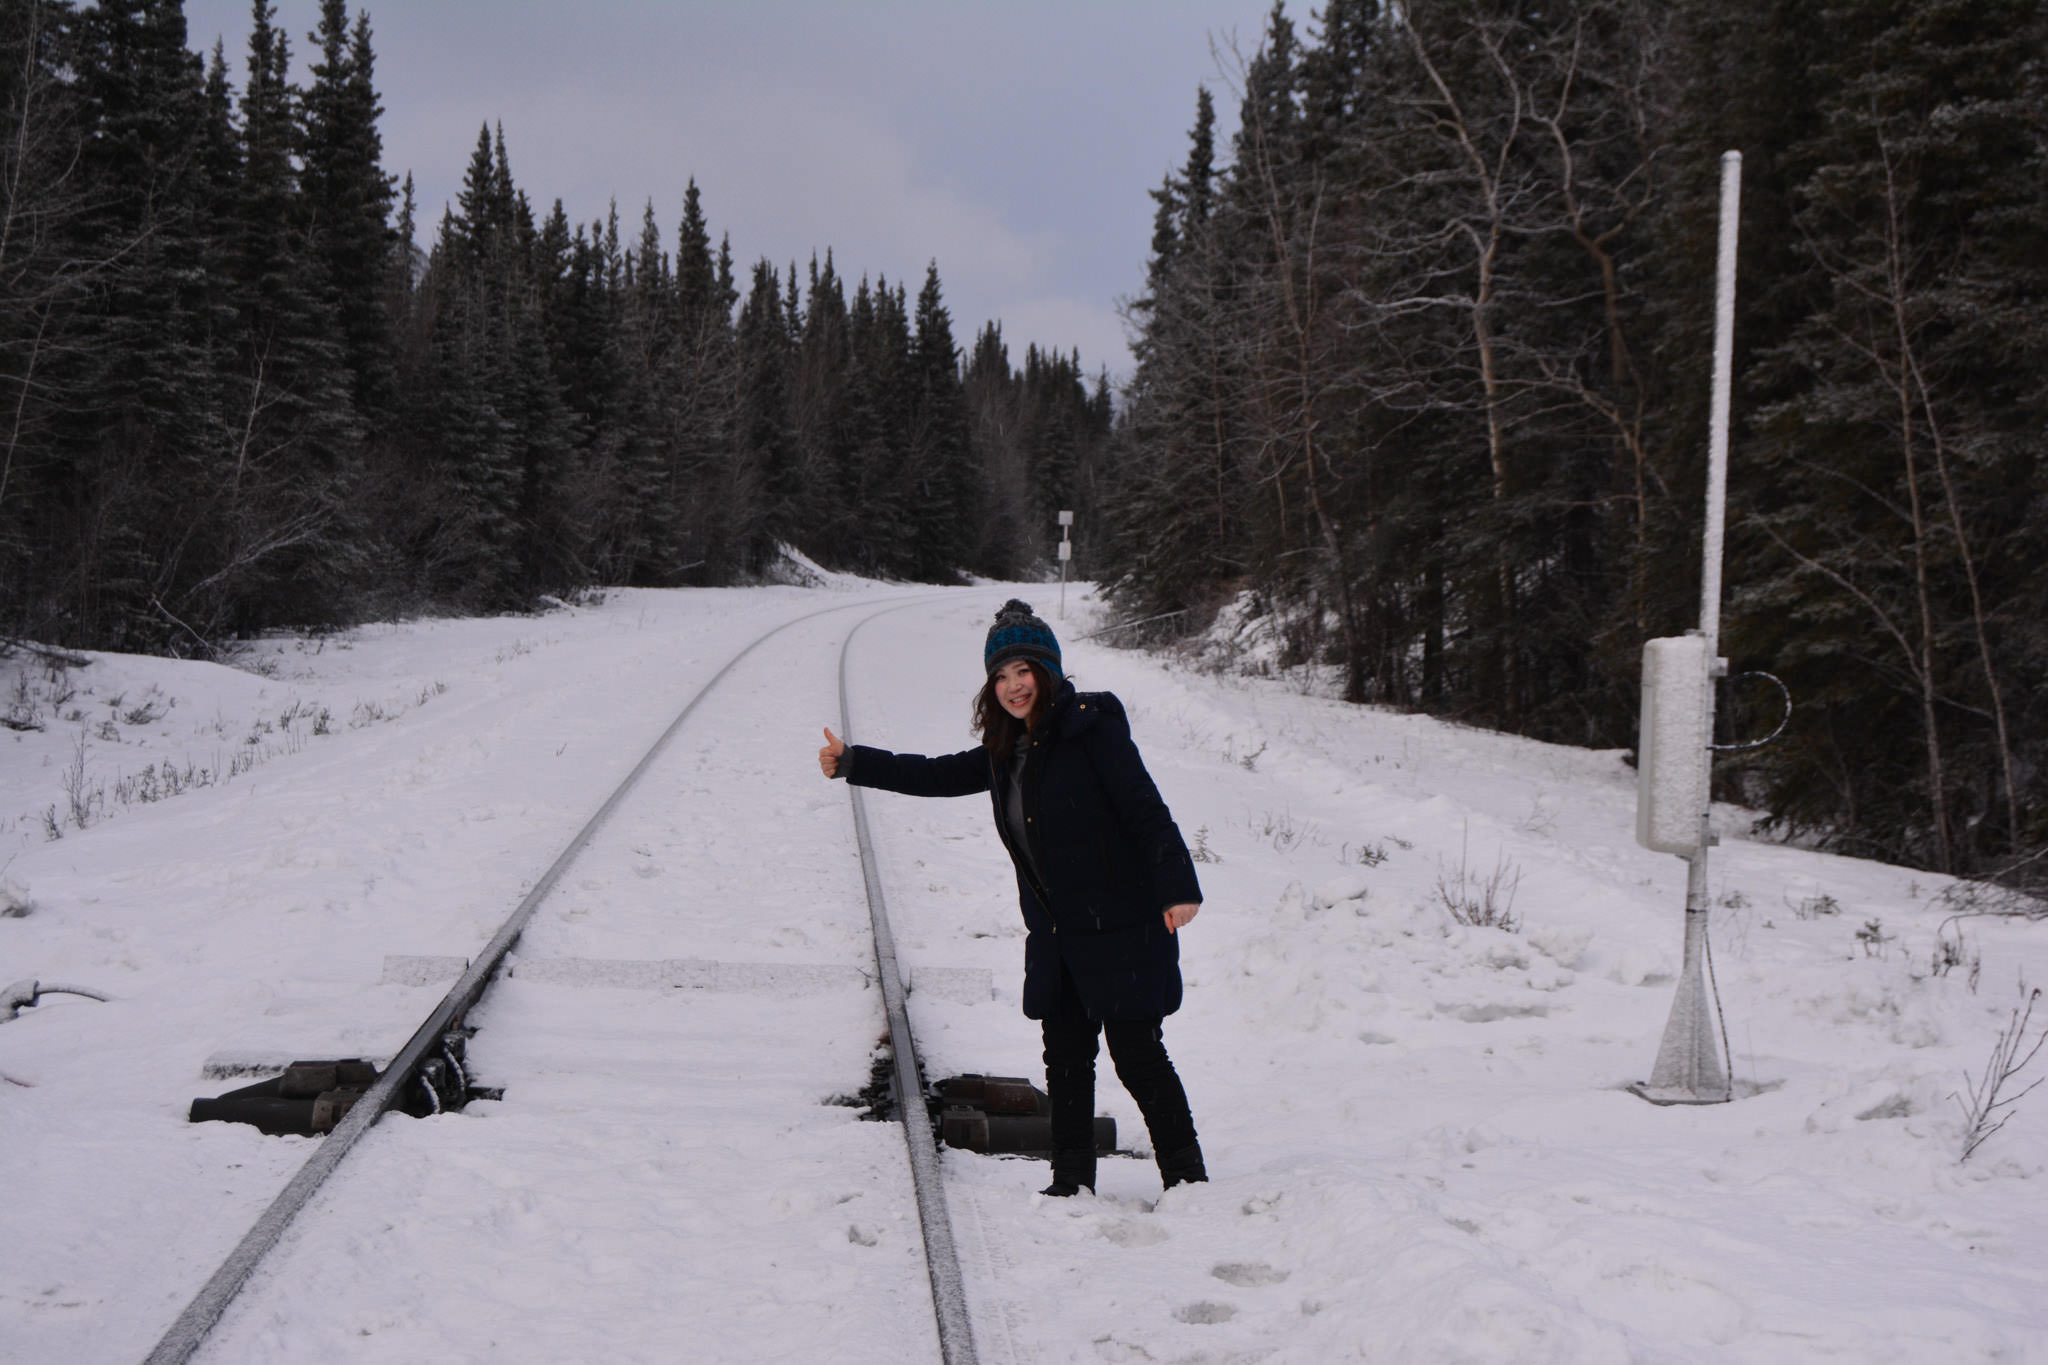 Denali Winter Drive Adventure | Guided Tour from Fairbanks, AK